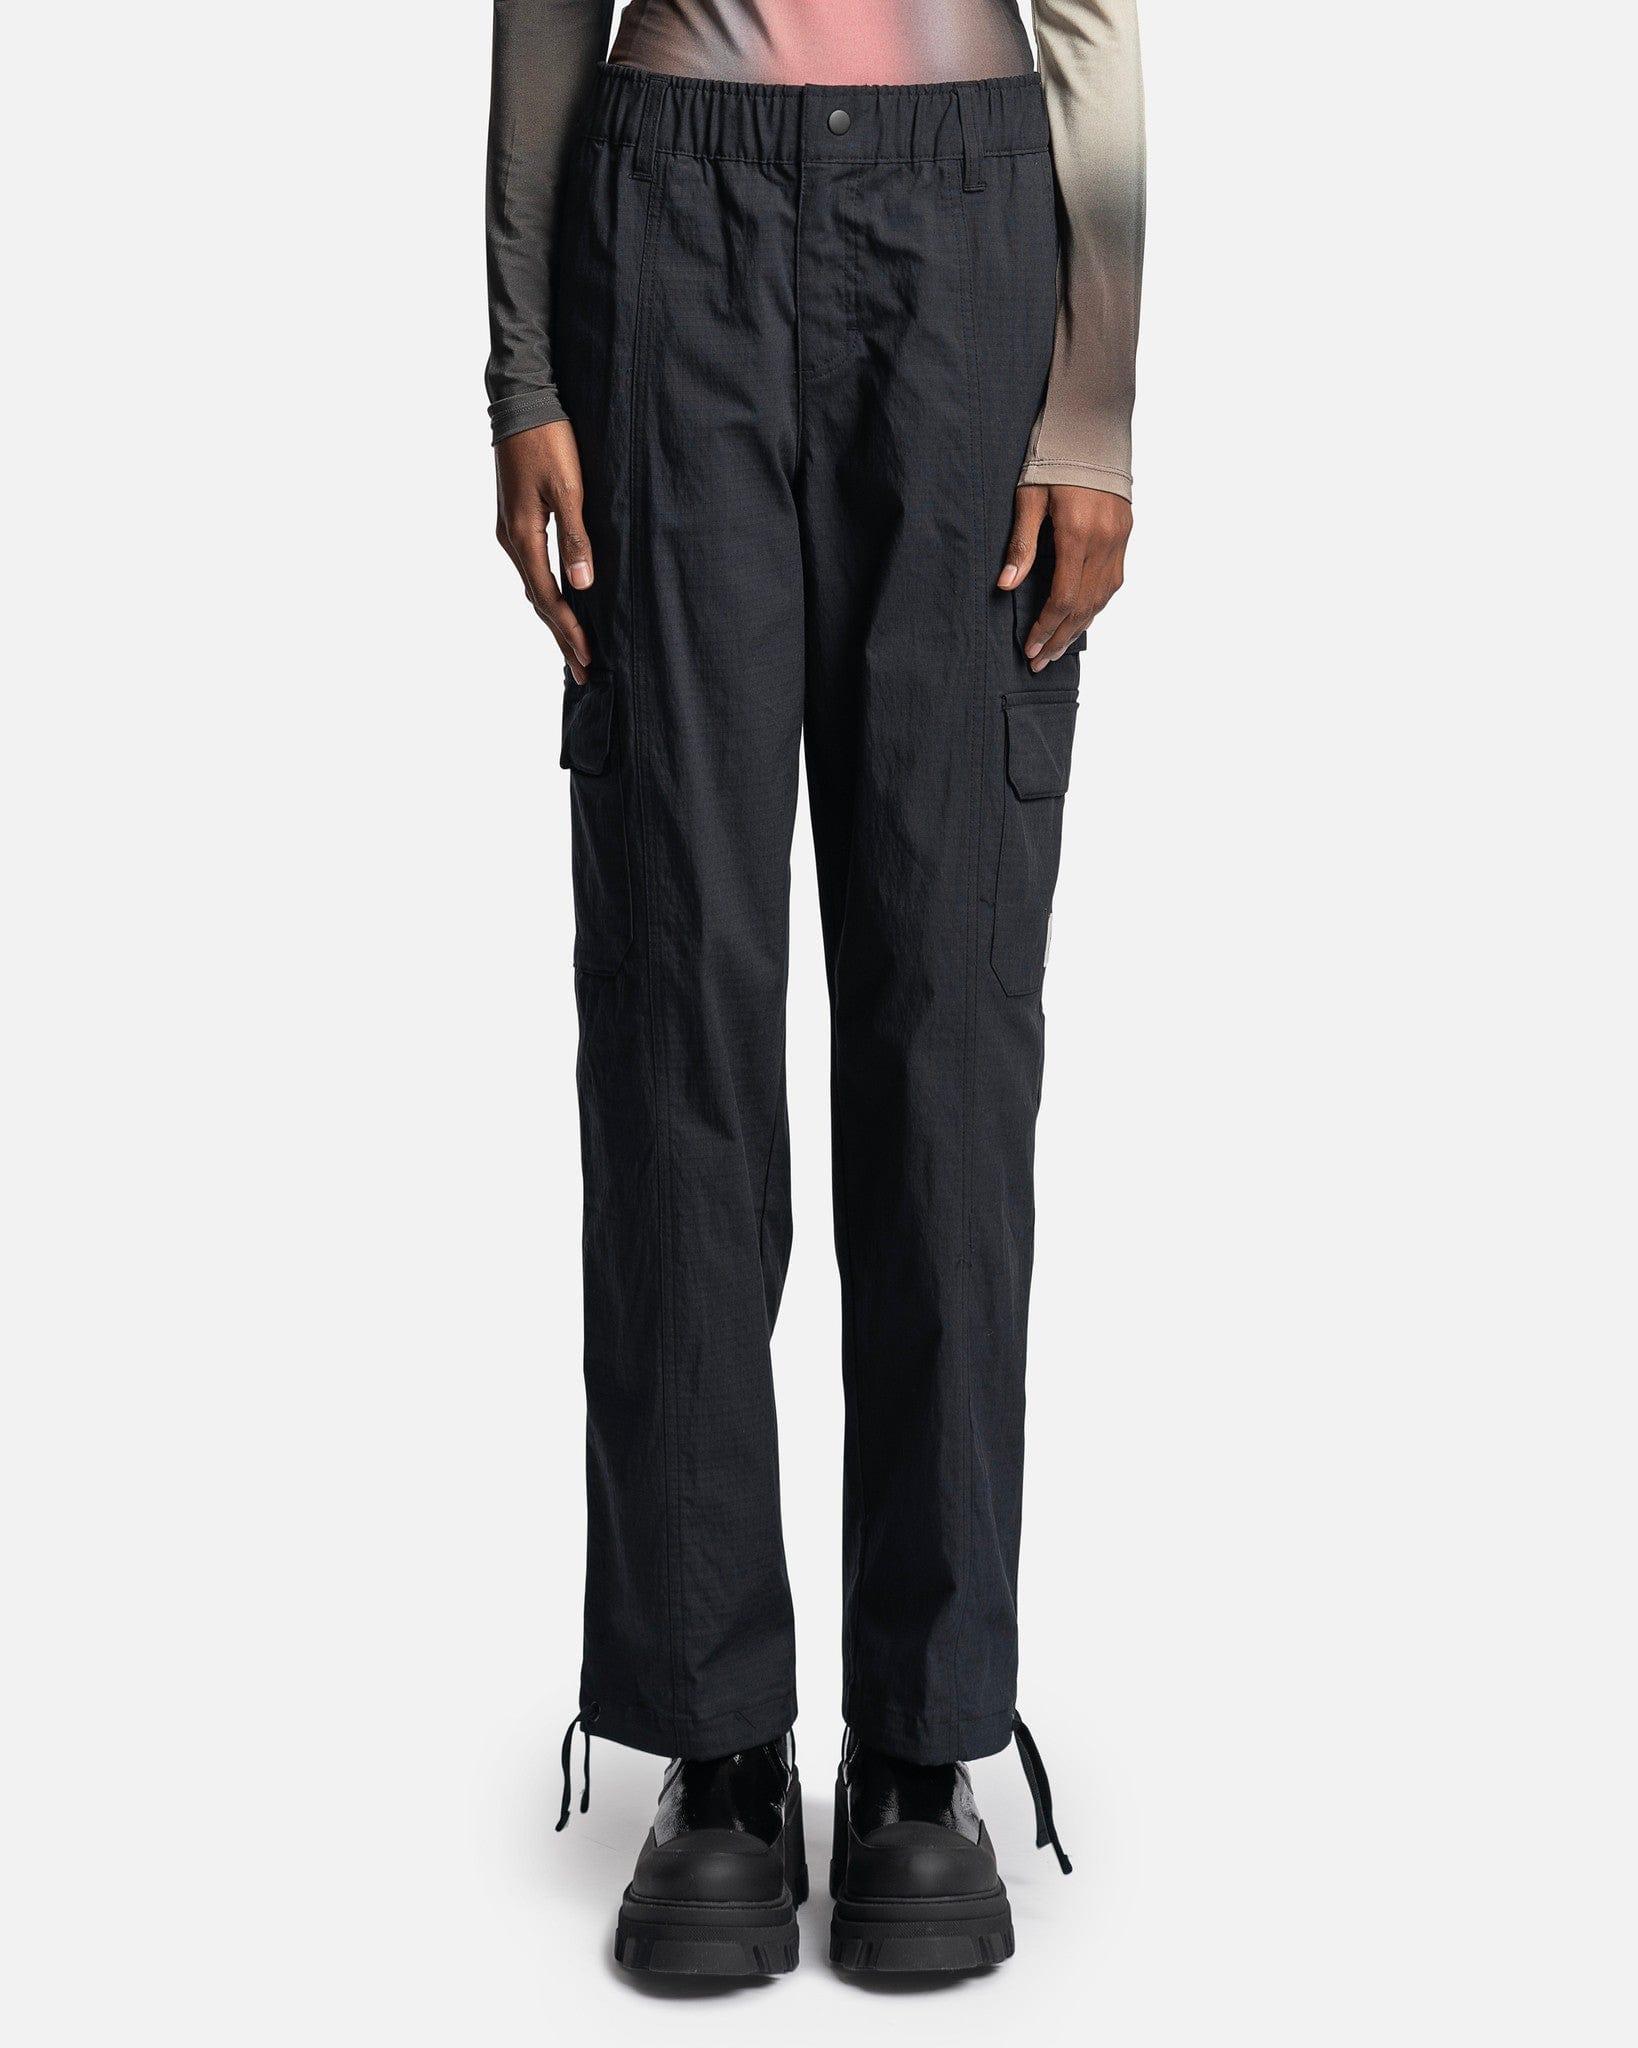 Nike Flight Chicago Pants in Black | Lyst